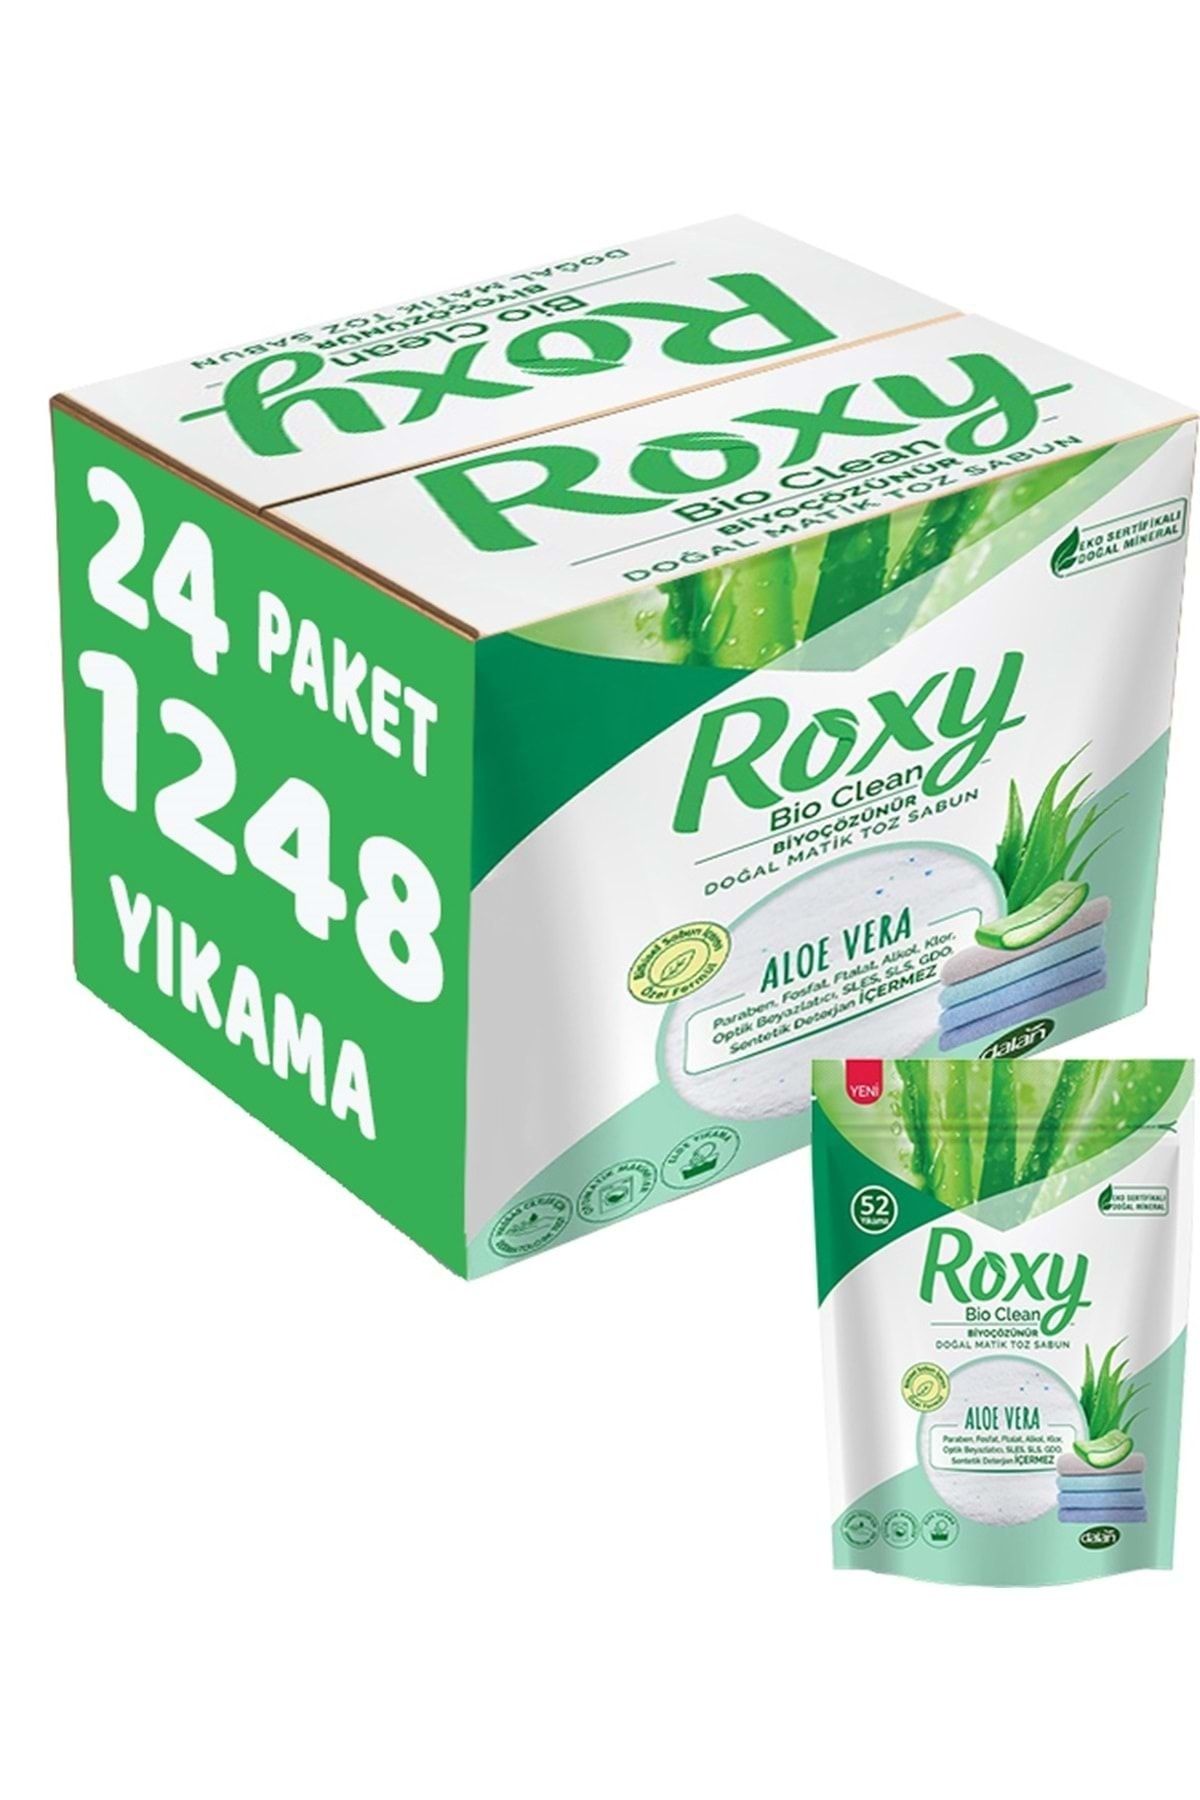 Dalan Roxy Bio Clean Matik Sabun Tozu 1.6 kg Aloe Vera 24lü Set 1248 Yıkama